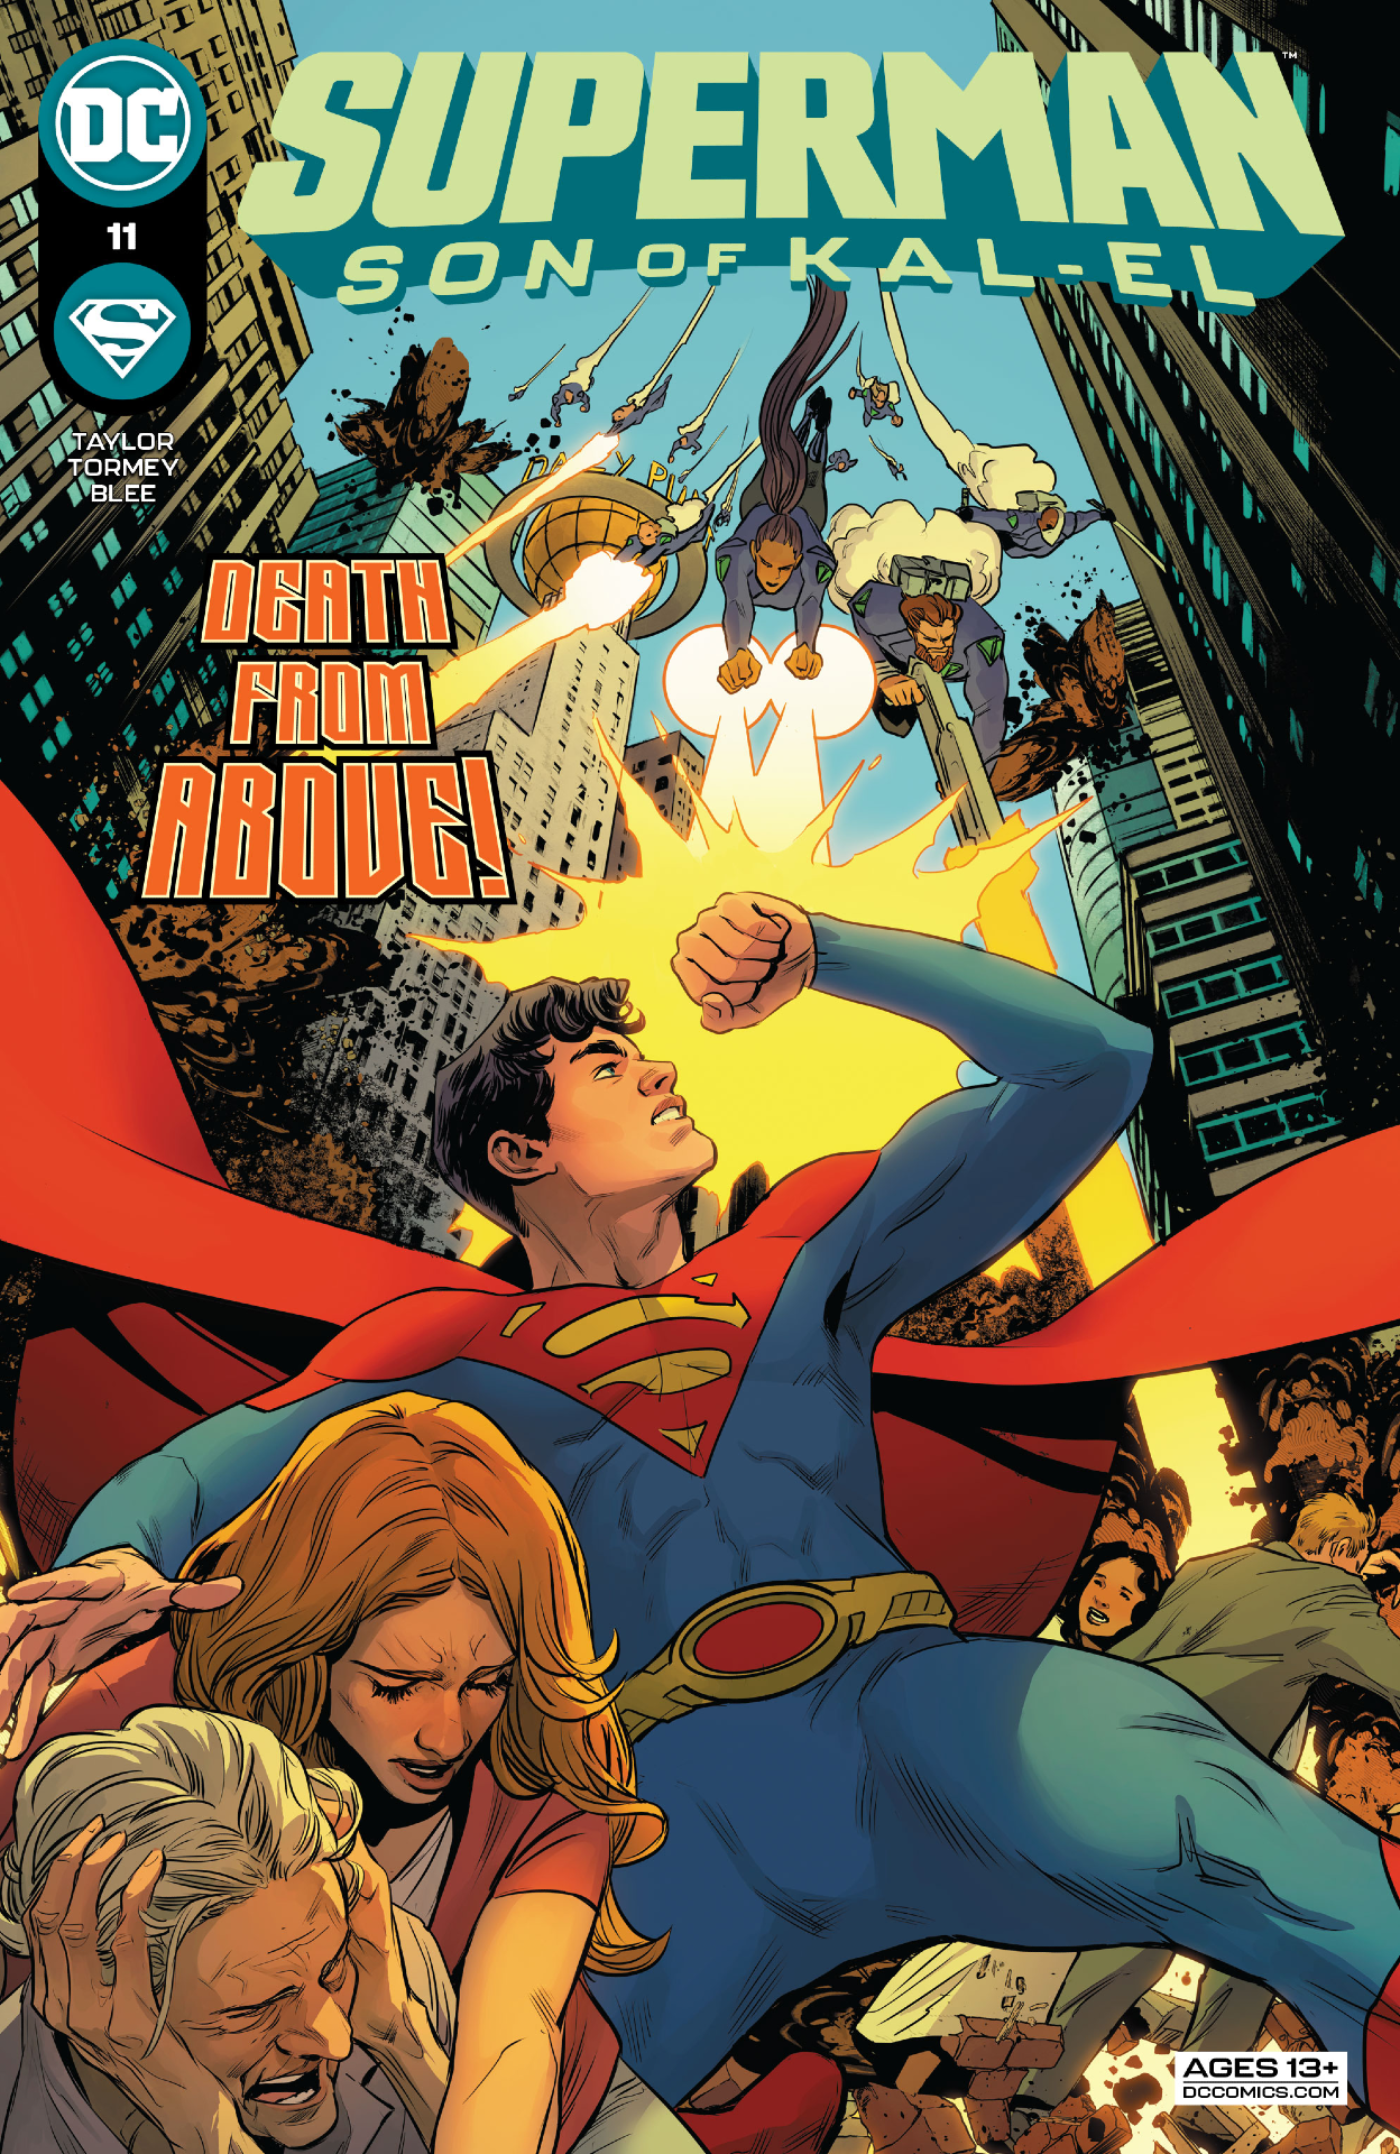 Superman son of kal el 11 cover